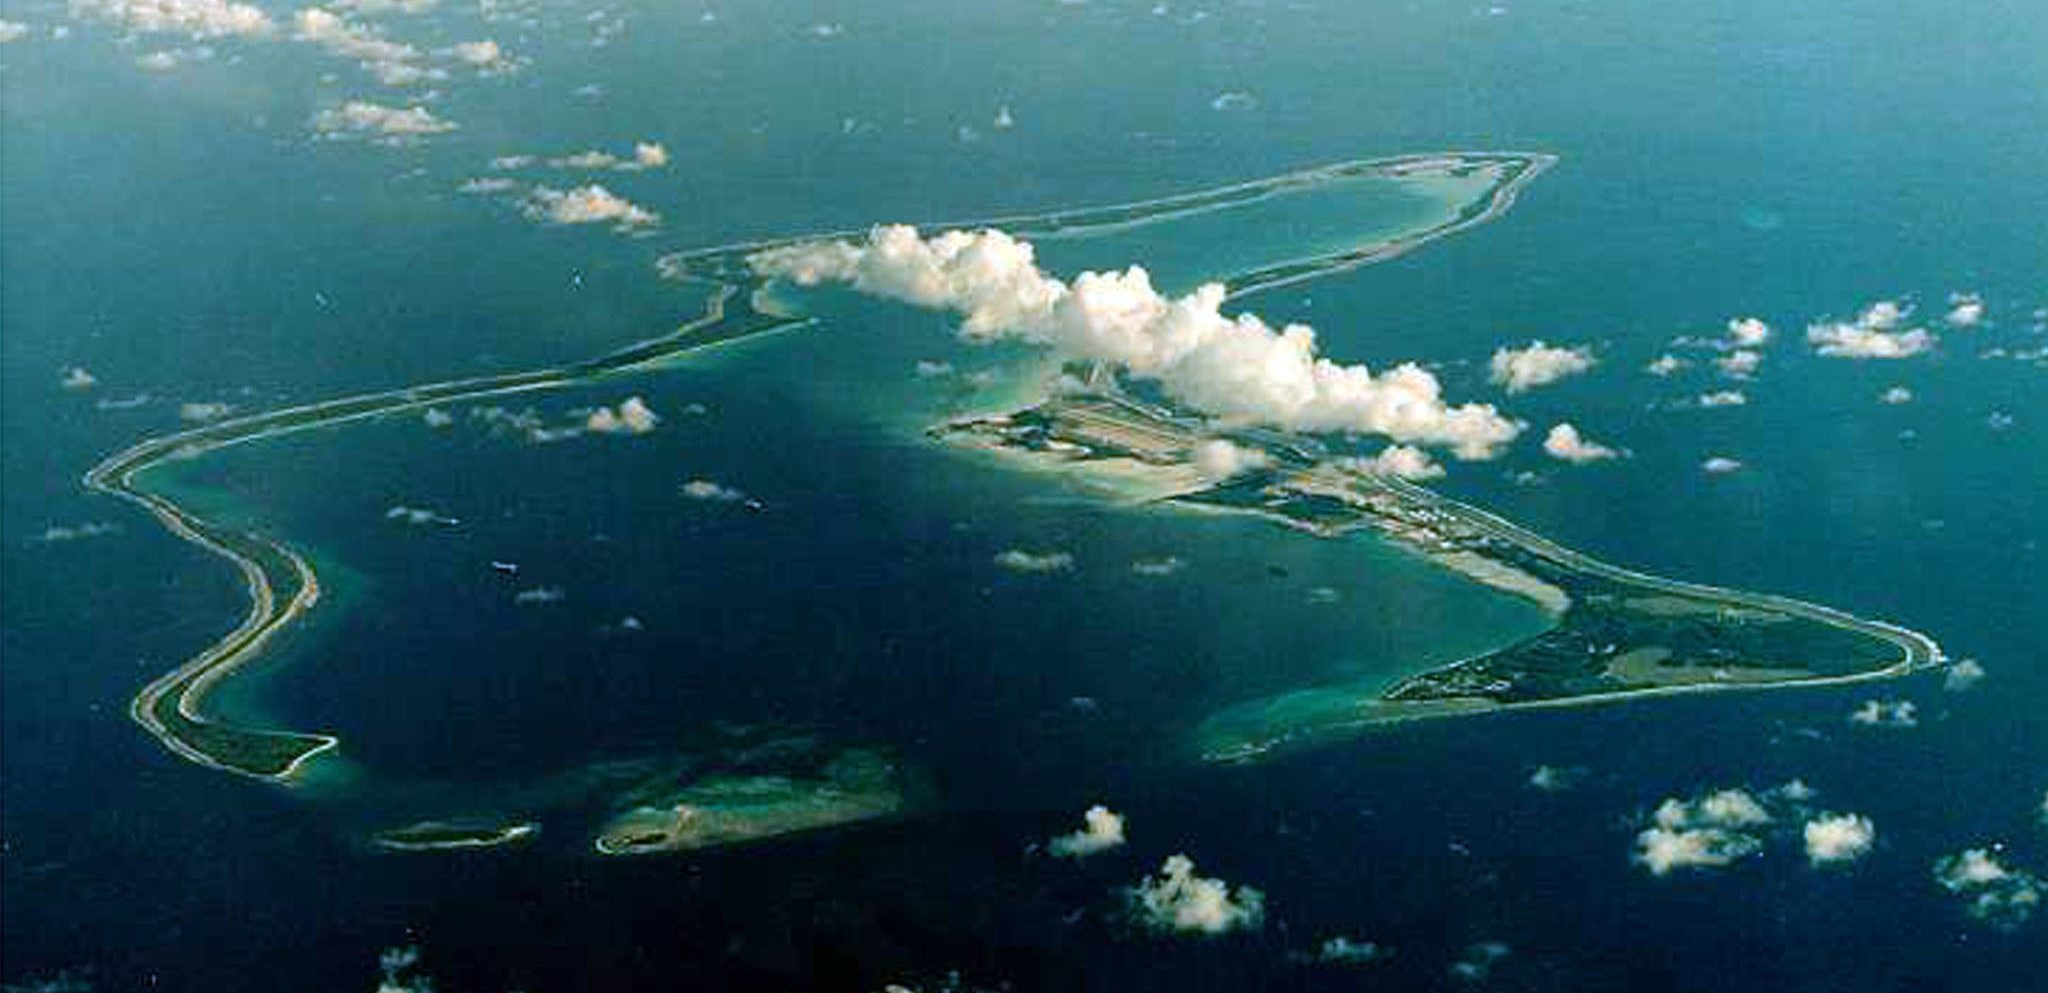 Agaléga islanders fear for future due to secret Indian navy base